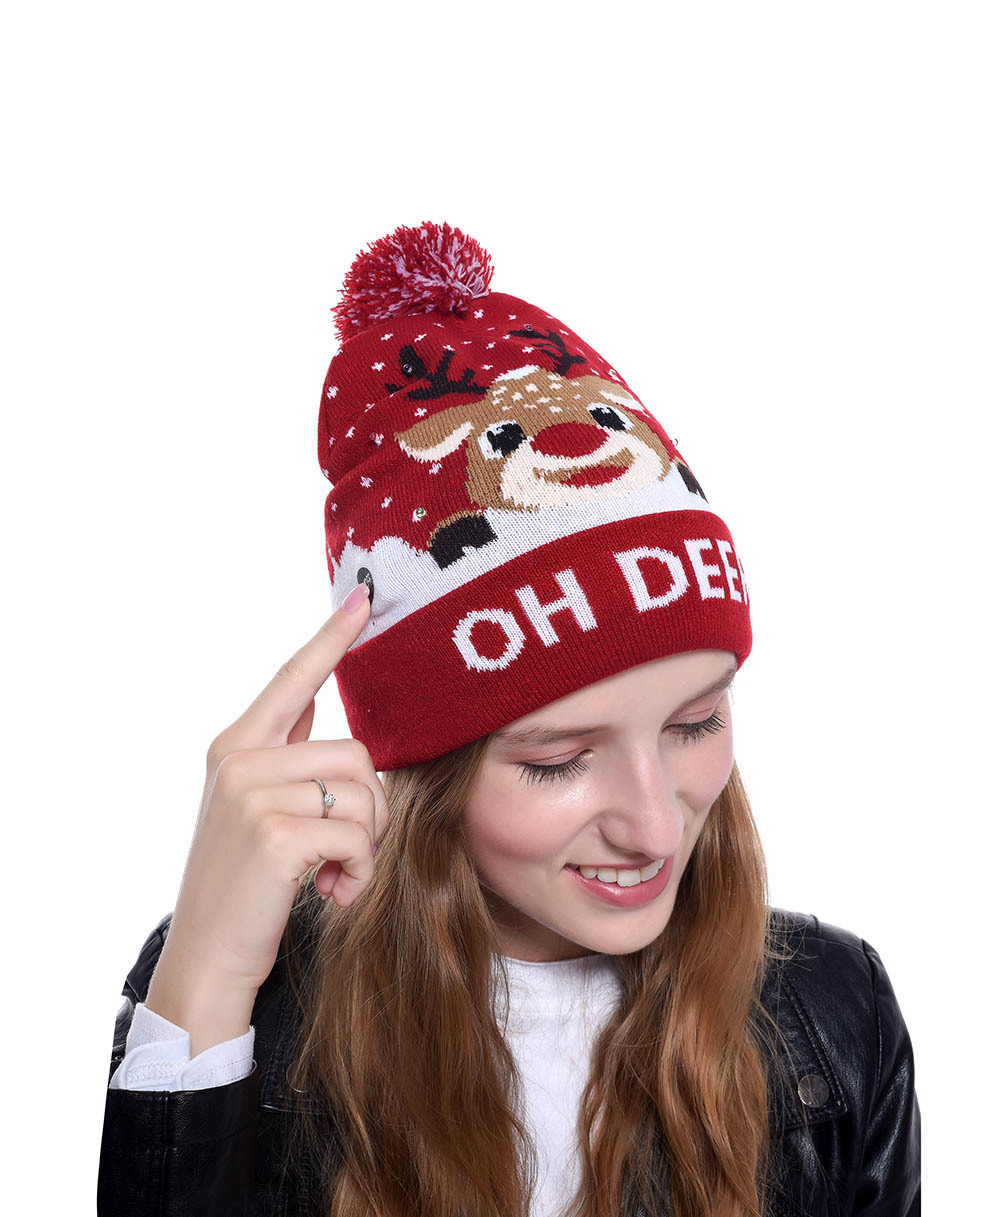 Adult Kids Child Xmas Decoration Reindeer Santa Snowman Top Led Light Christmas Hat